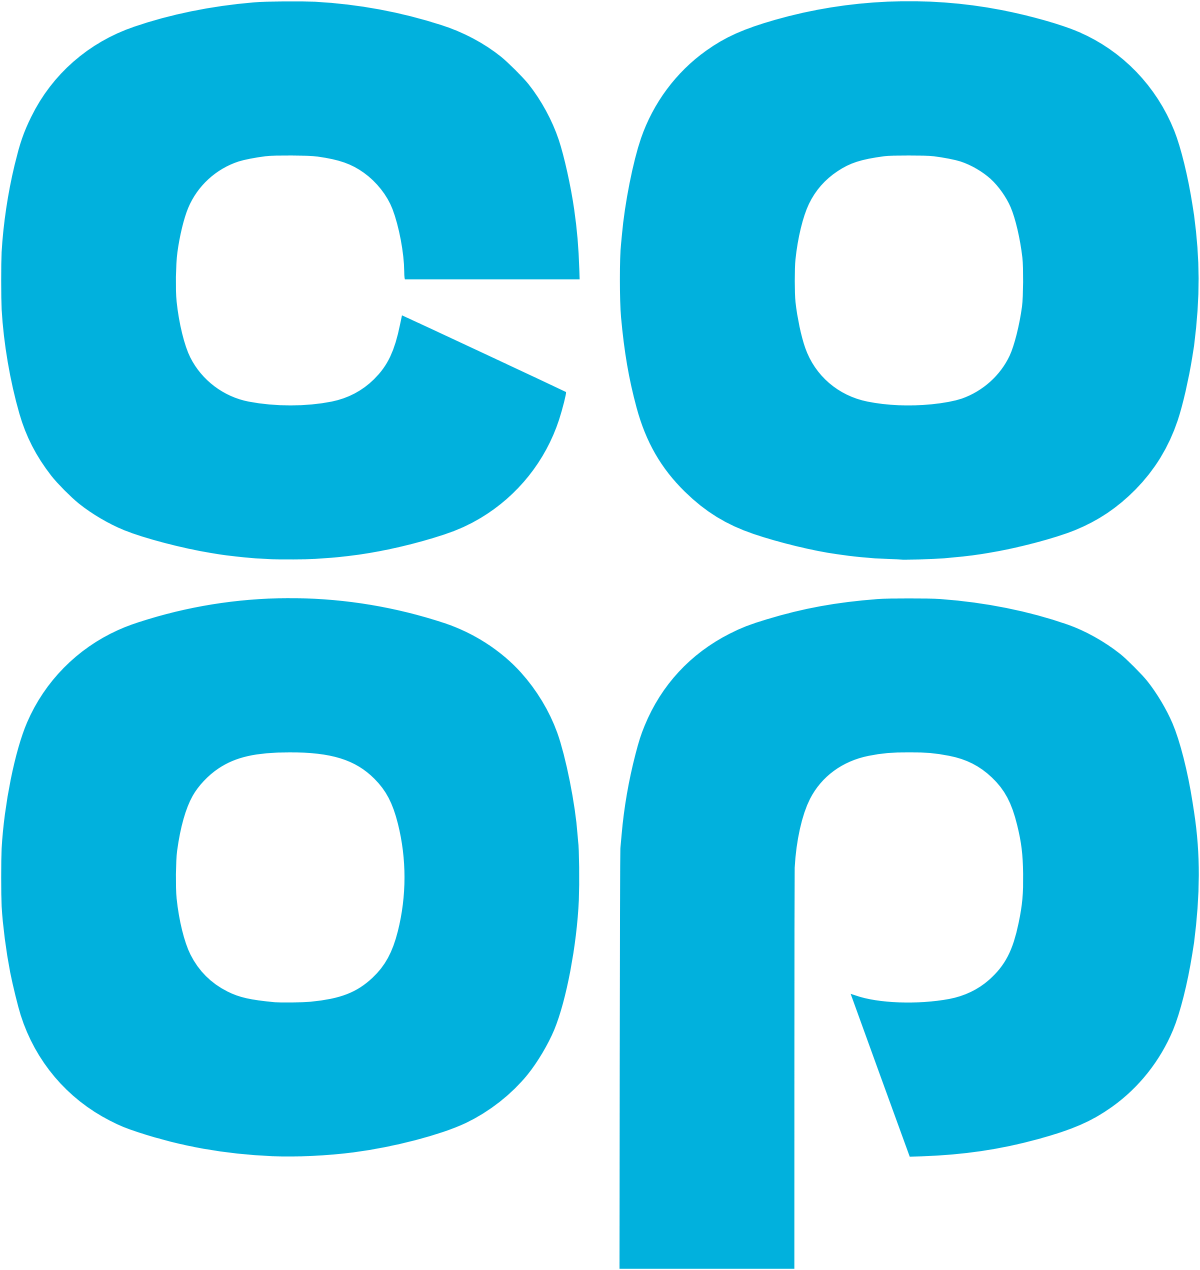 Co-Op Community Fund